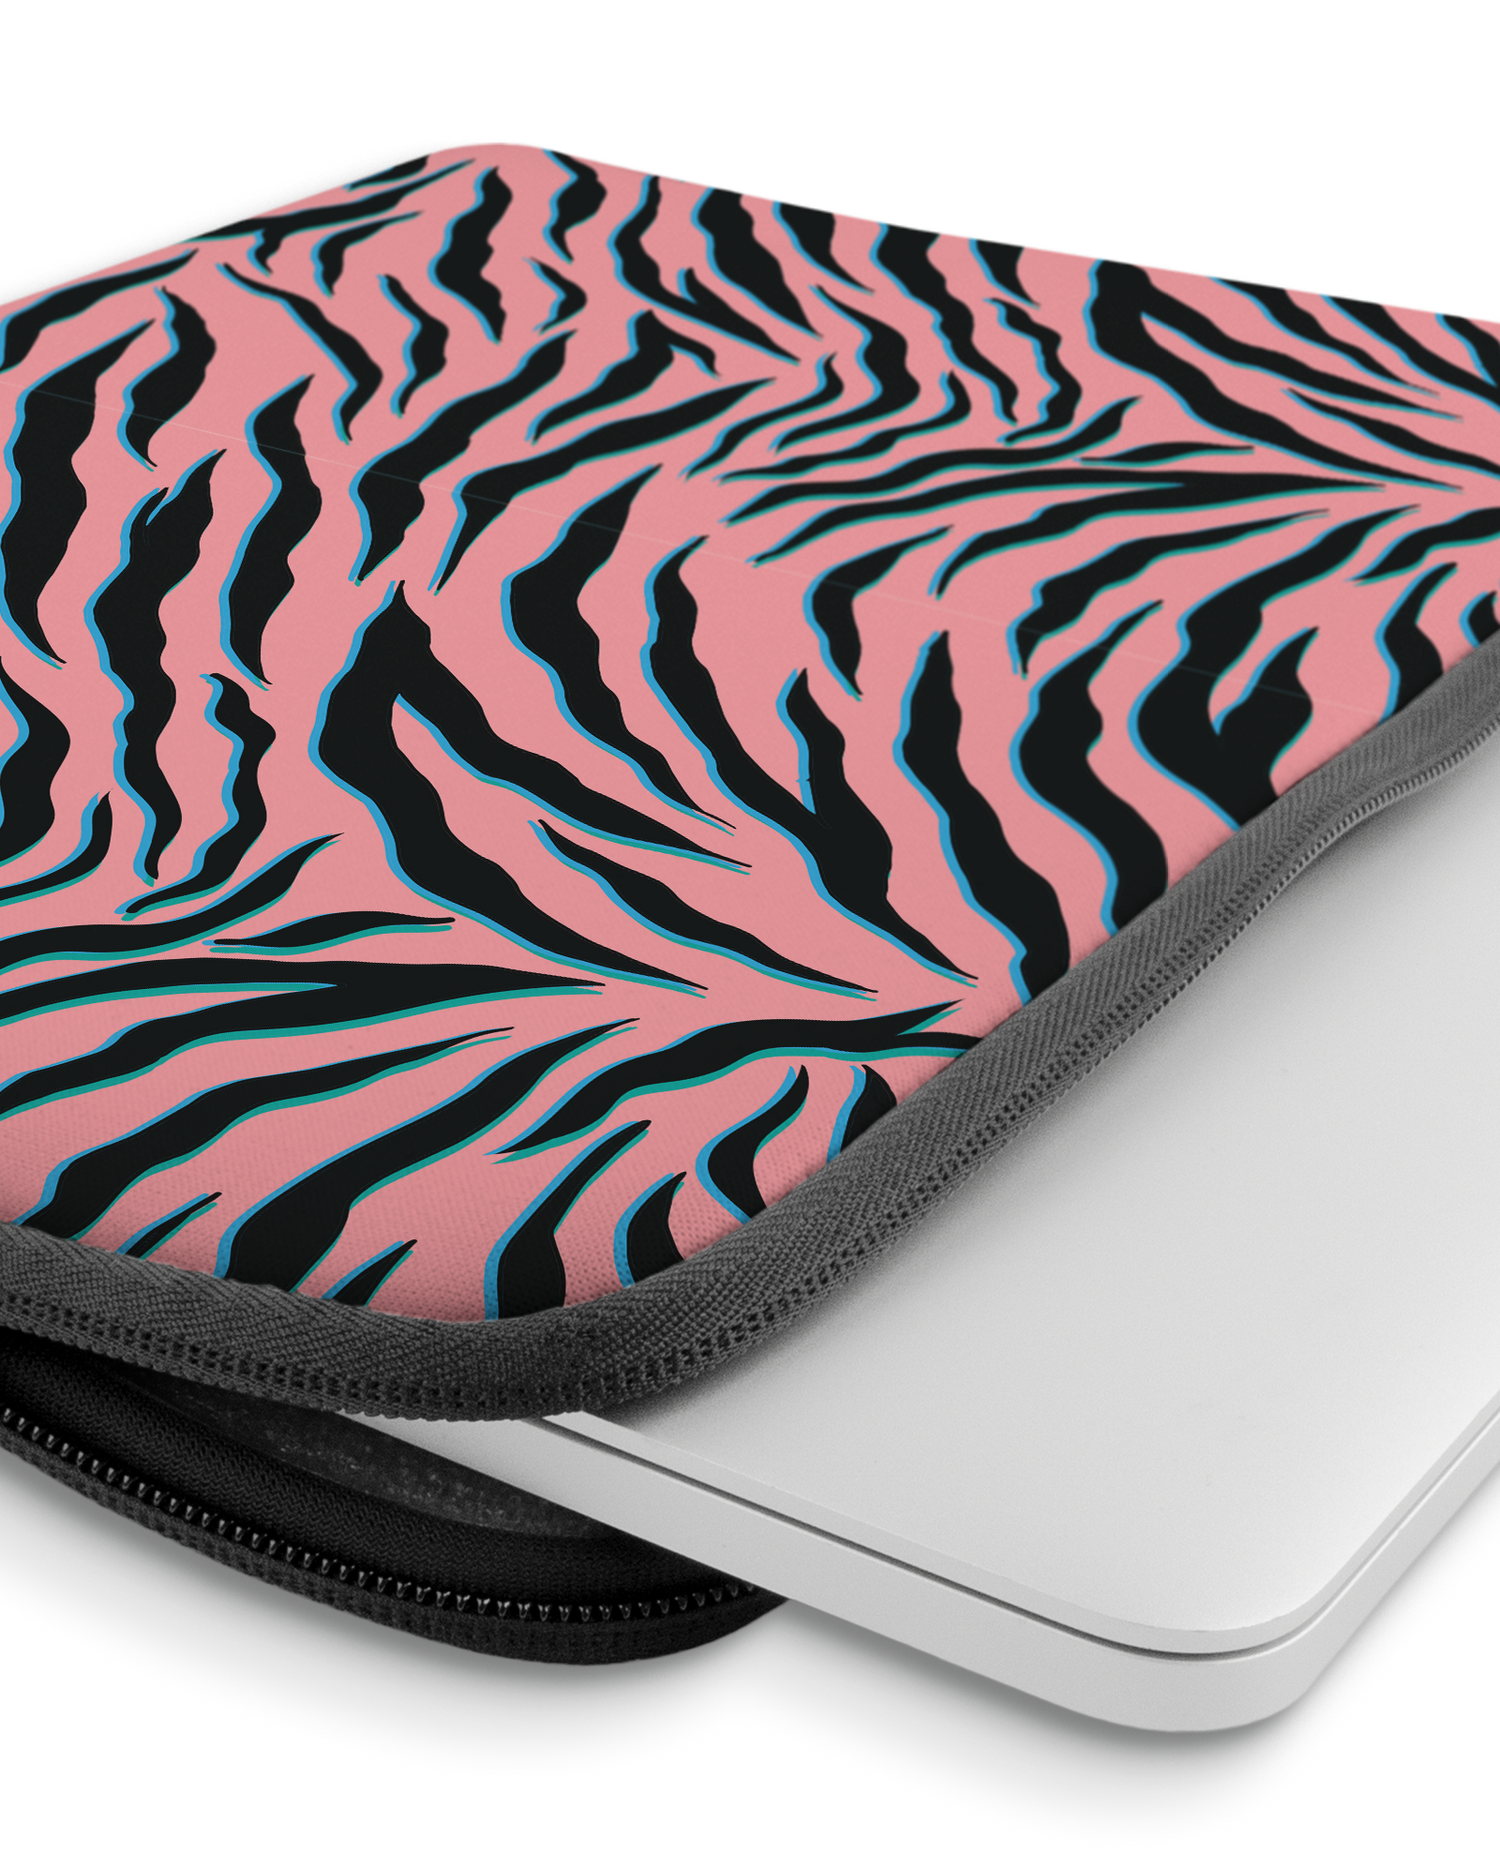 Pink Zebra Laptophülle 14 Zoll mit Gerät im Inneren